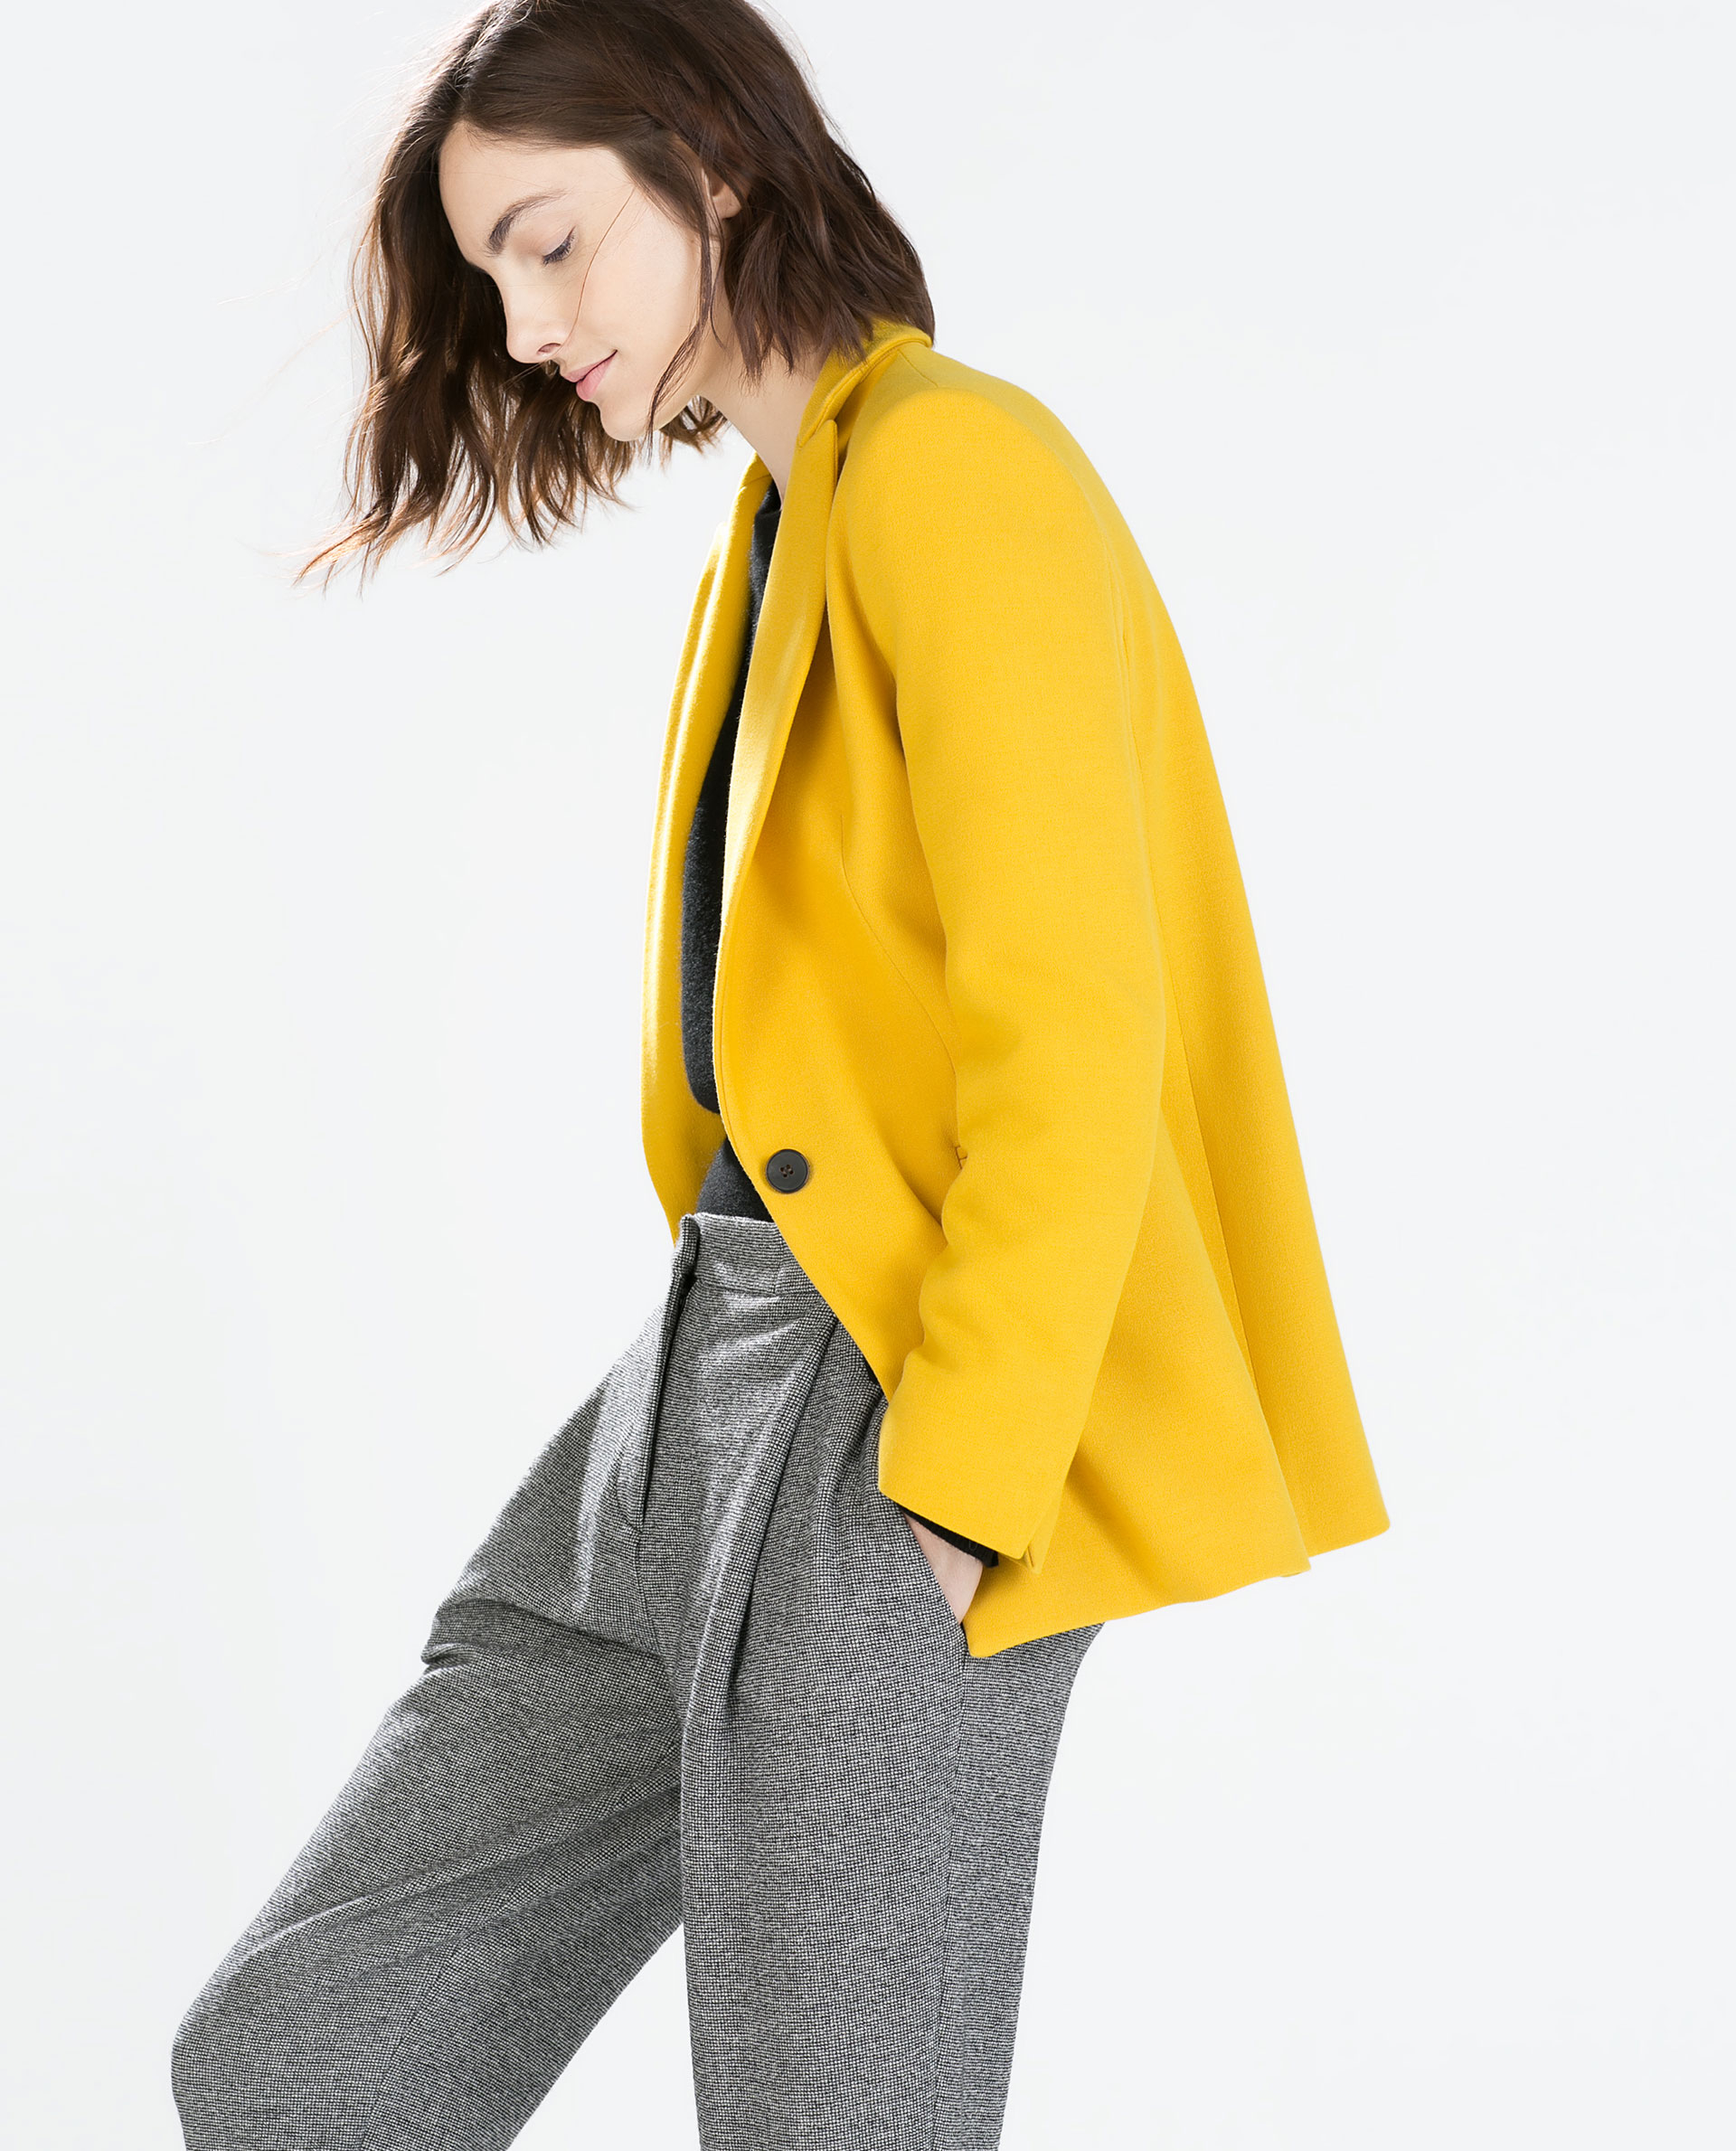 Zara Long Blazer With Contrast Cuffs in Yellow (Mustard) | Lyst